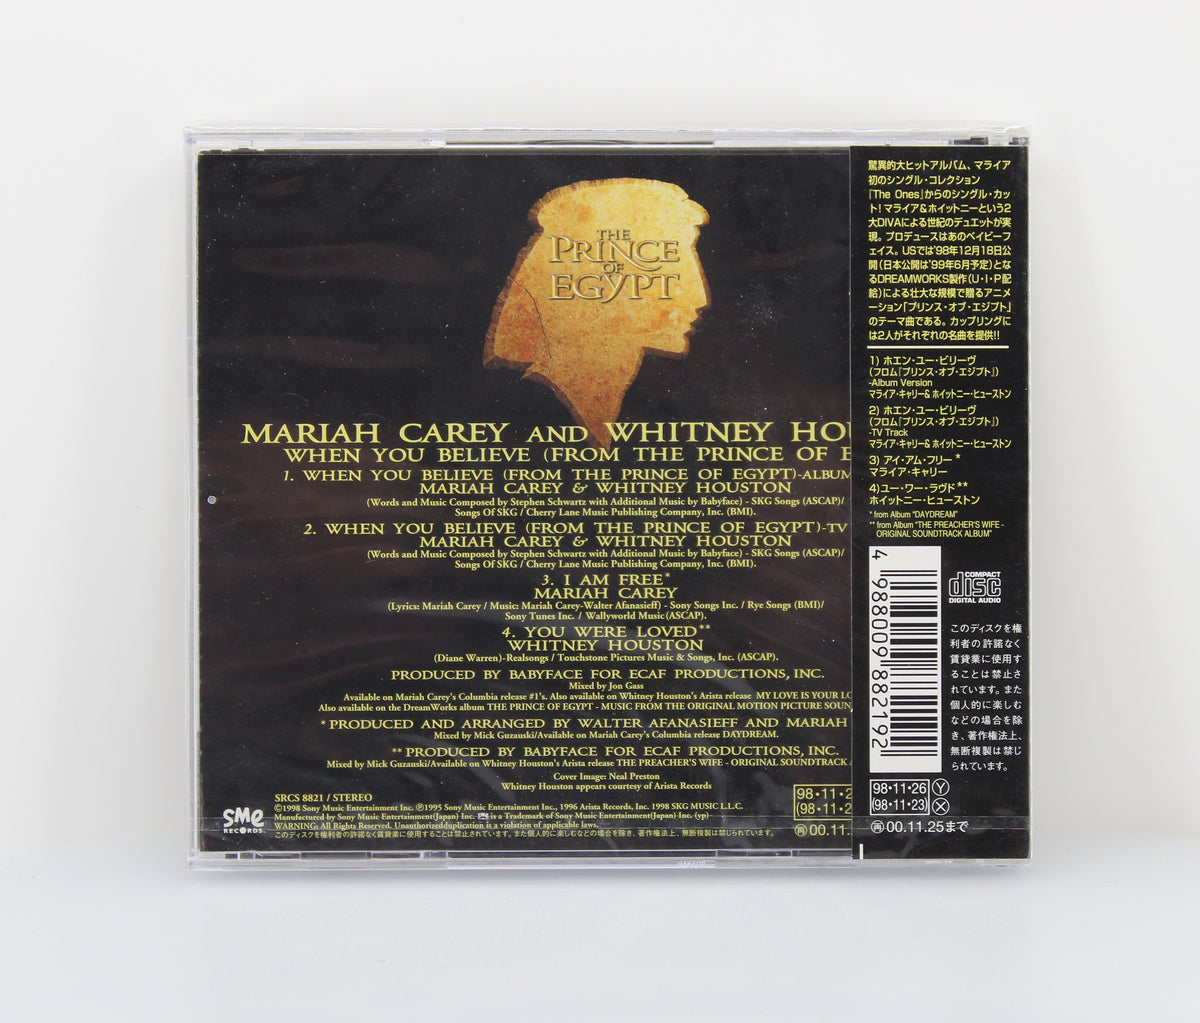 Mariah Carey, Whitney Houston - When You Believe, CD Single, Japan 1998